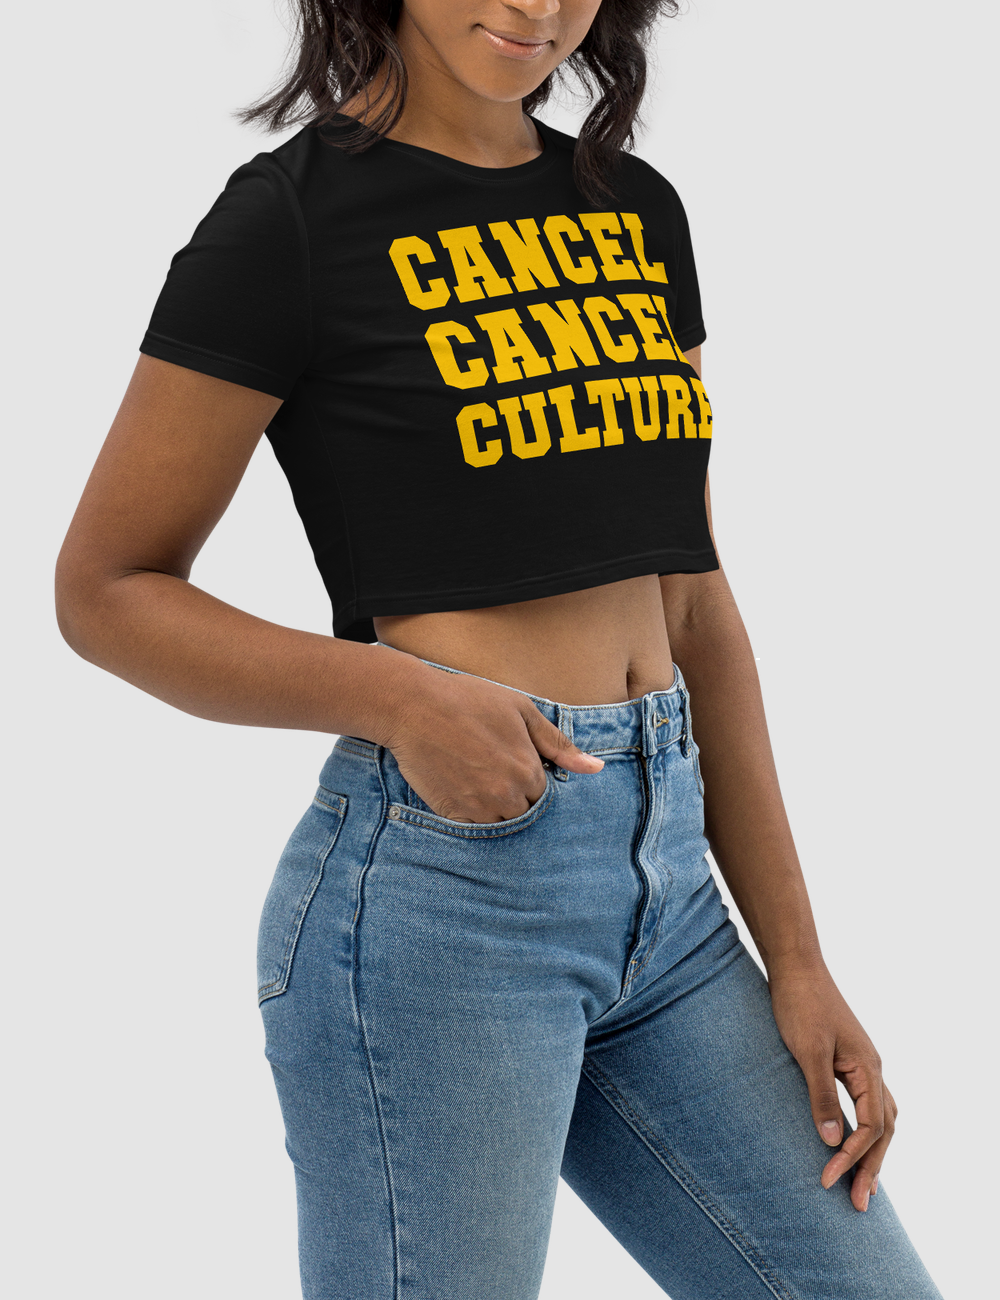 Cancel Cancel Culture | Women's Crop Top T-Shirt OniTakai